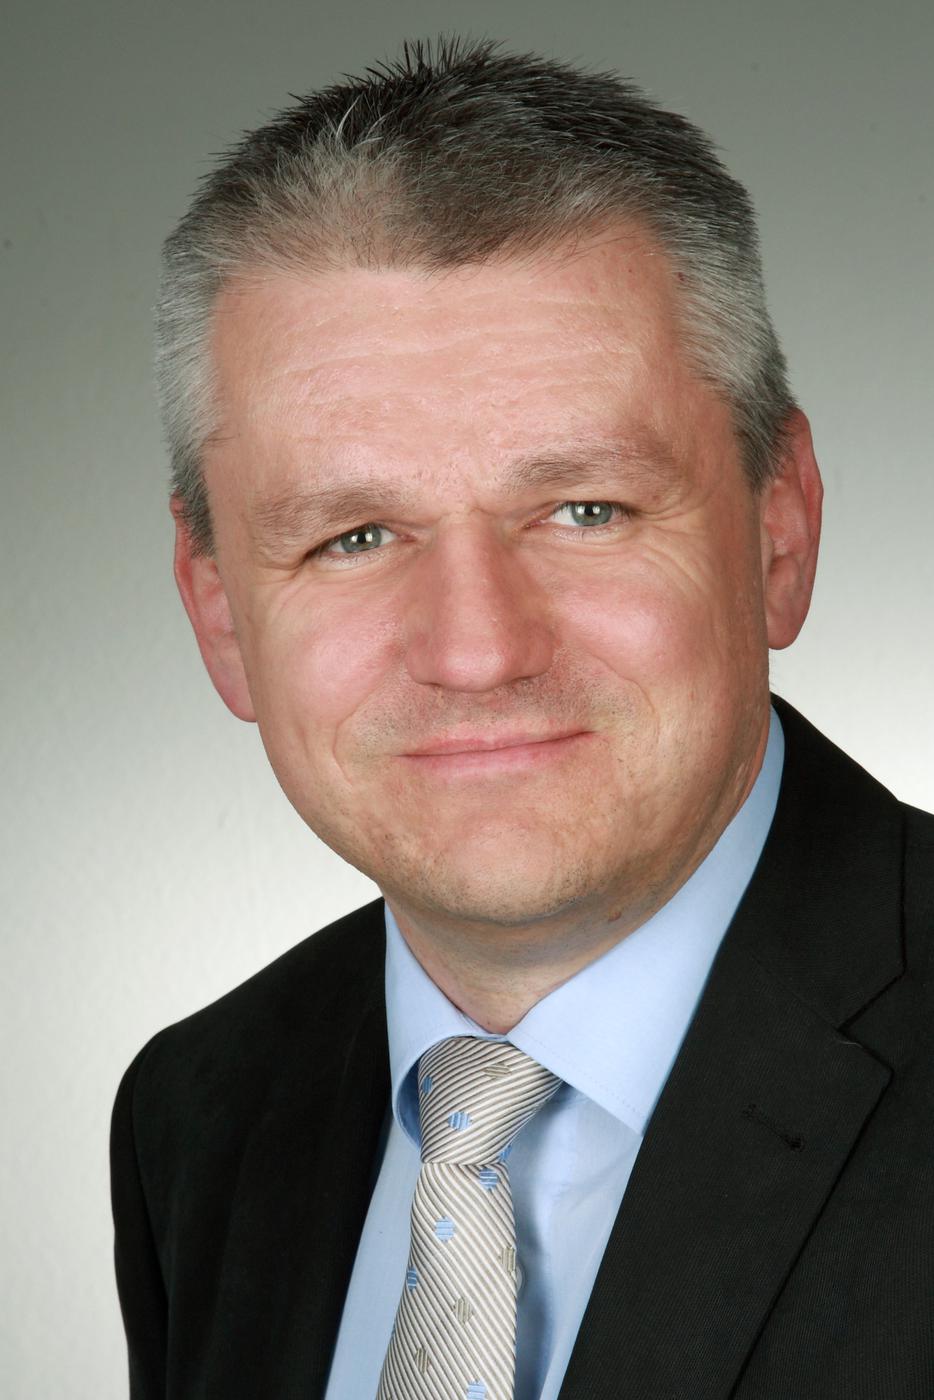 Jörg-MIchael Teply, Bürgermeister von Wurmberg